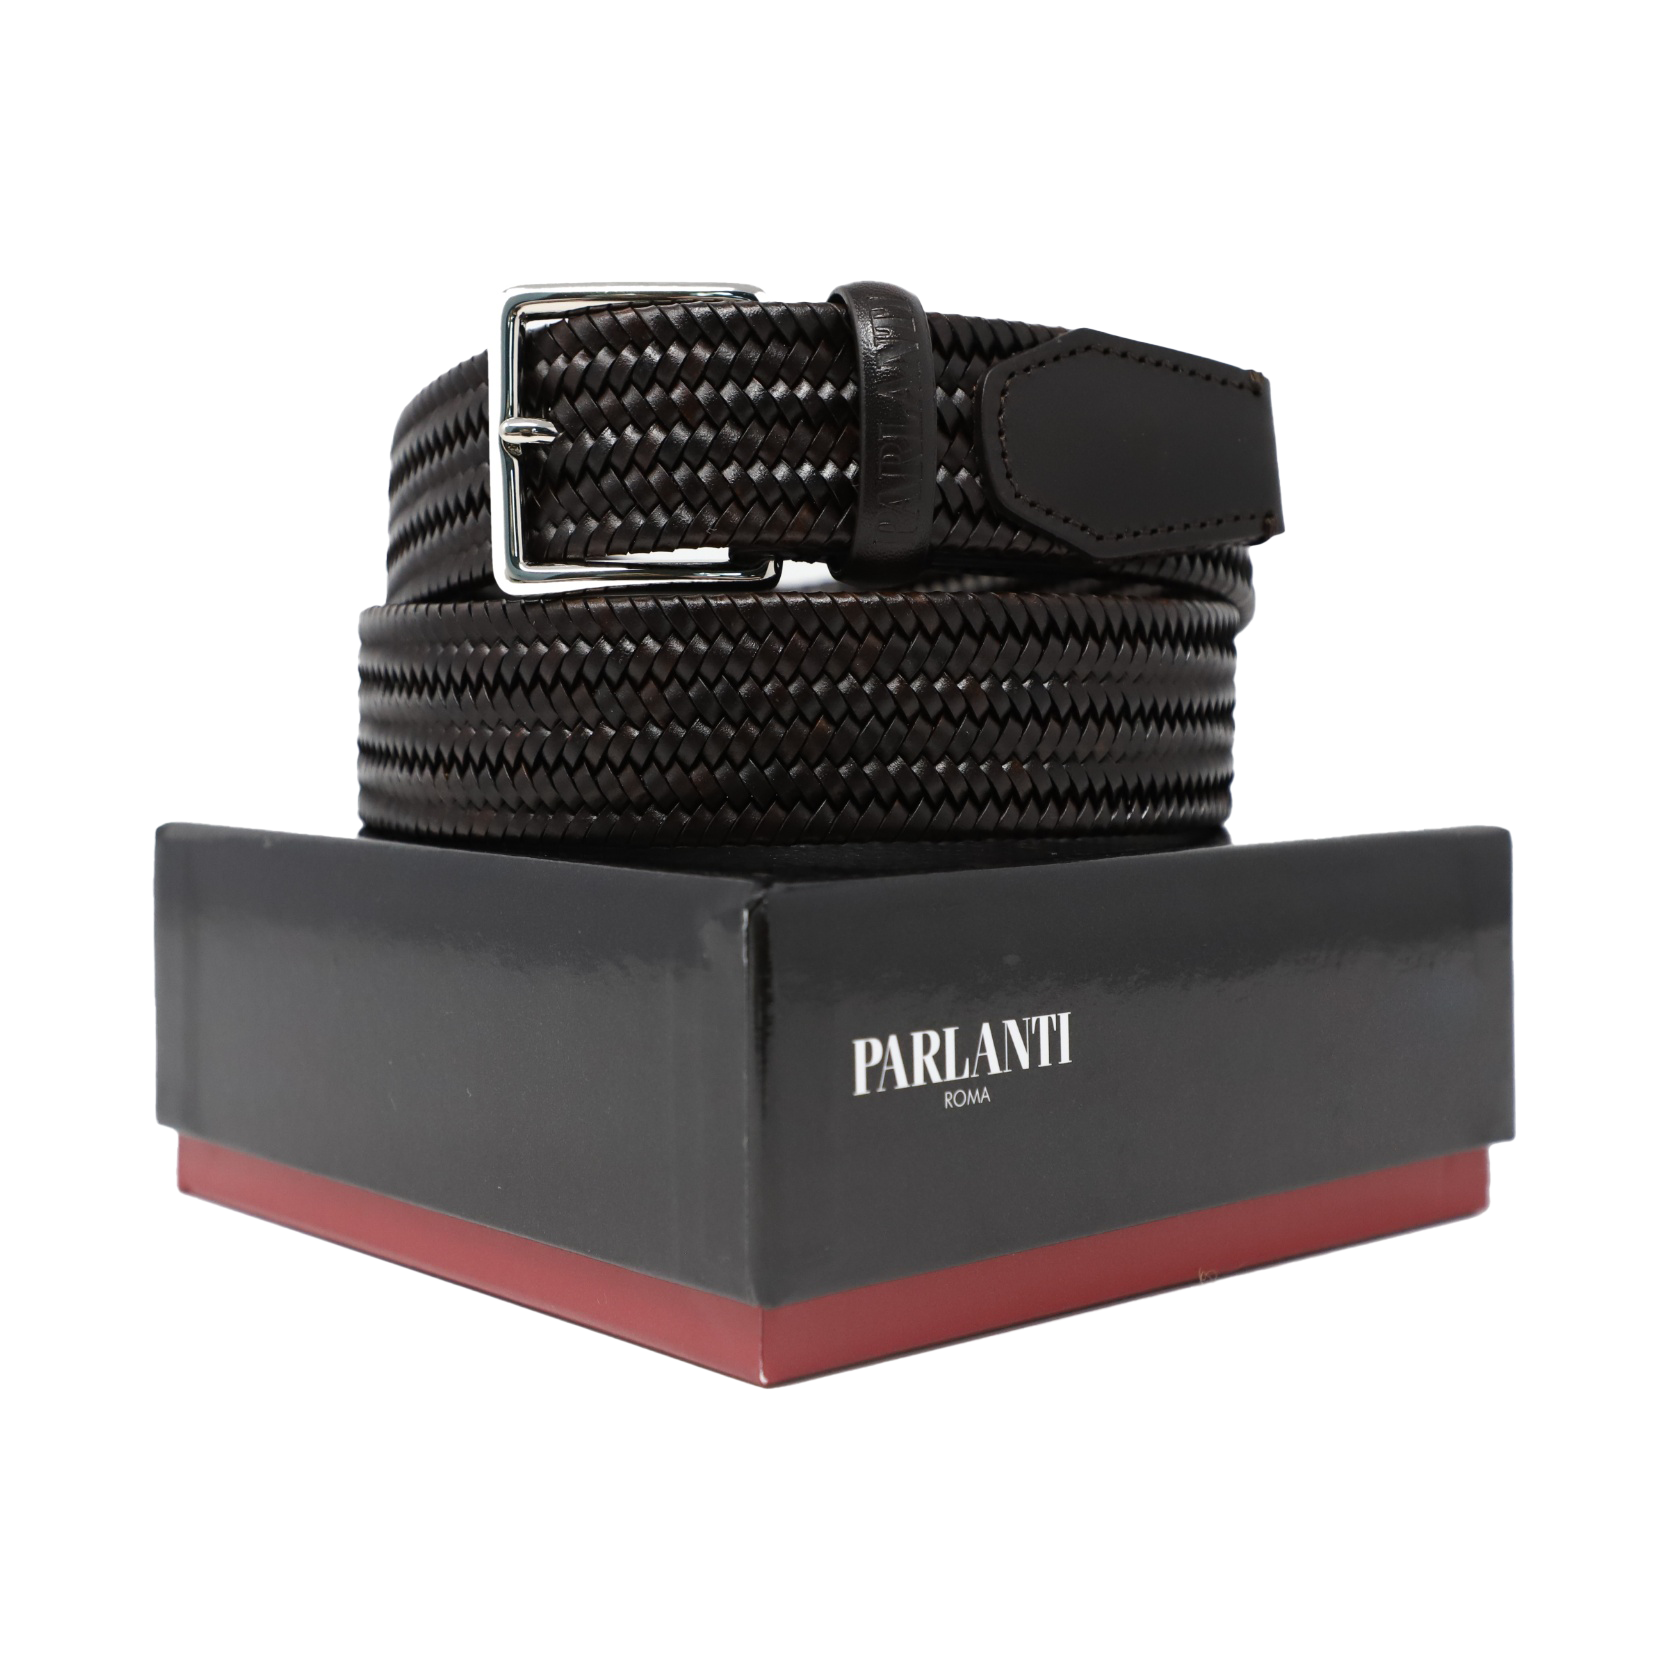 Parlanti Elastic Leather Belt